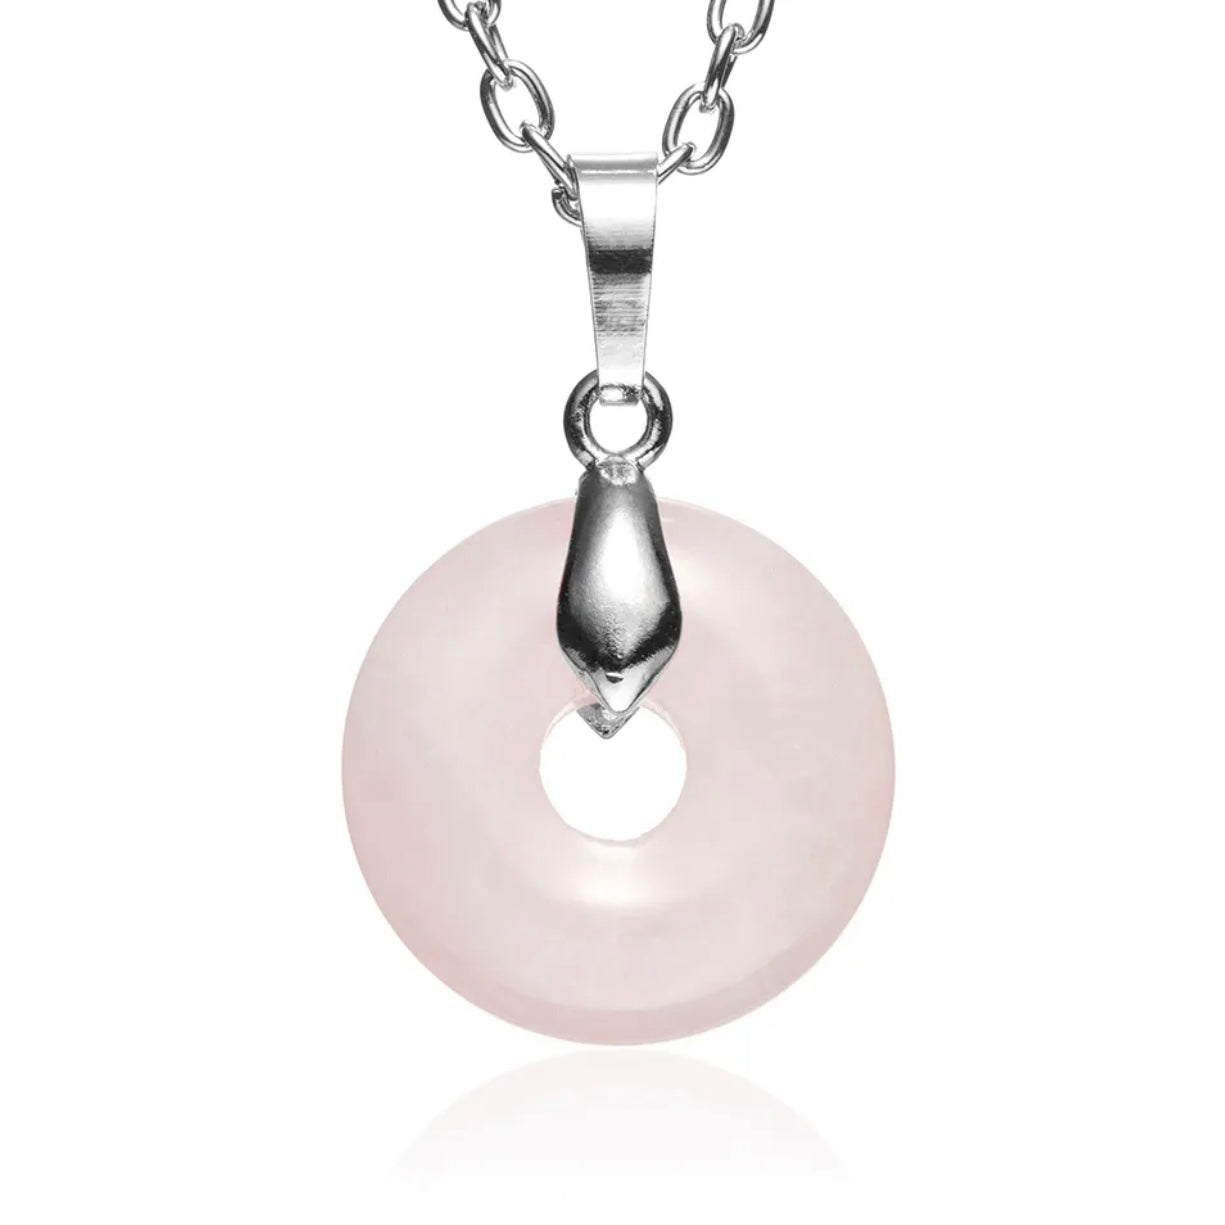 Rose quartz crystal Necklace- Donut pendant